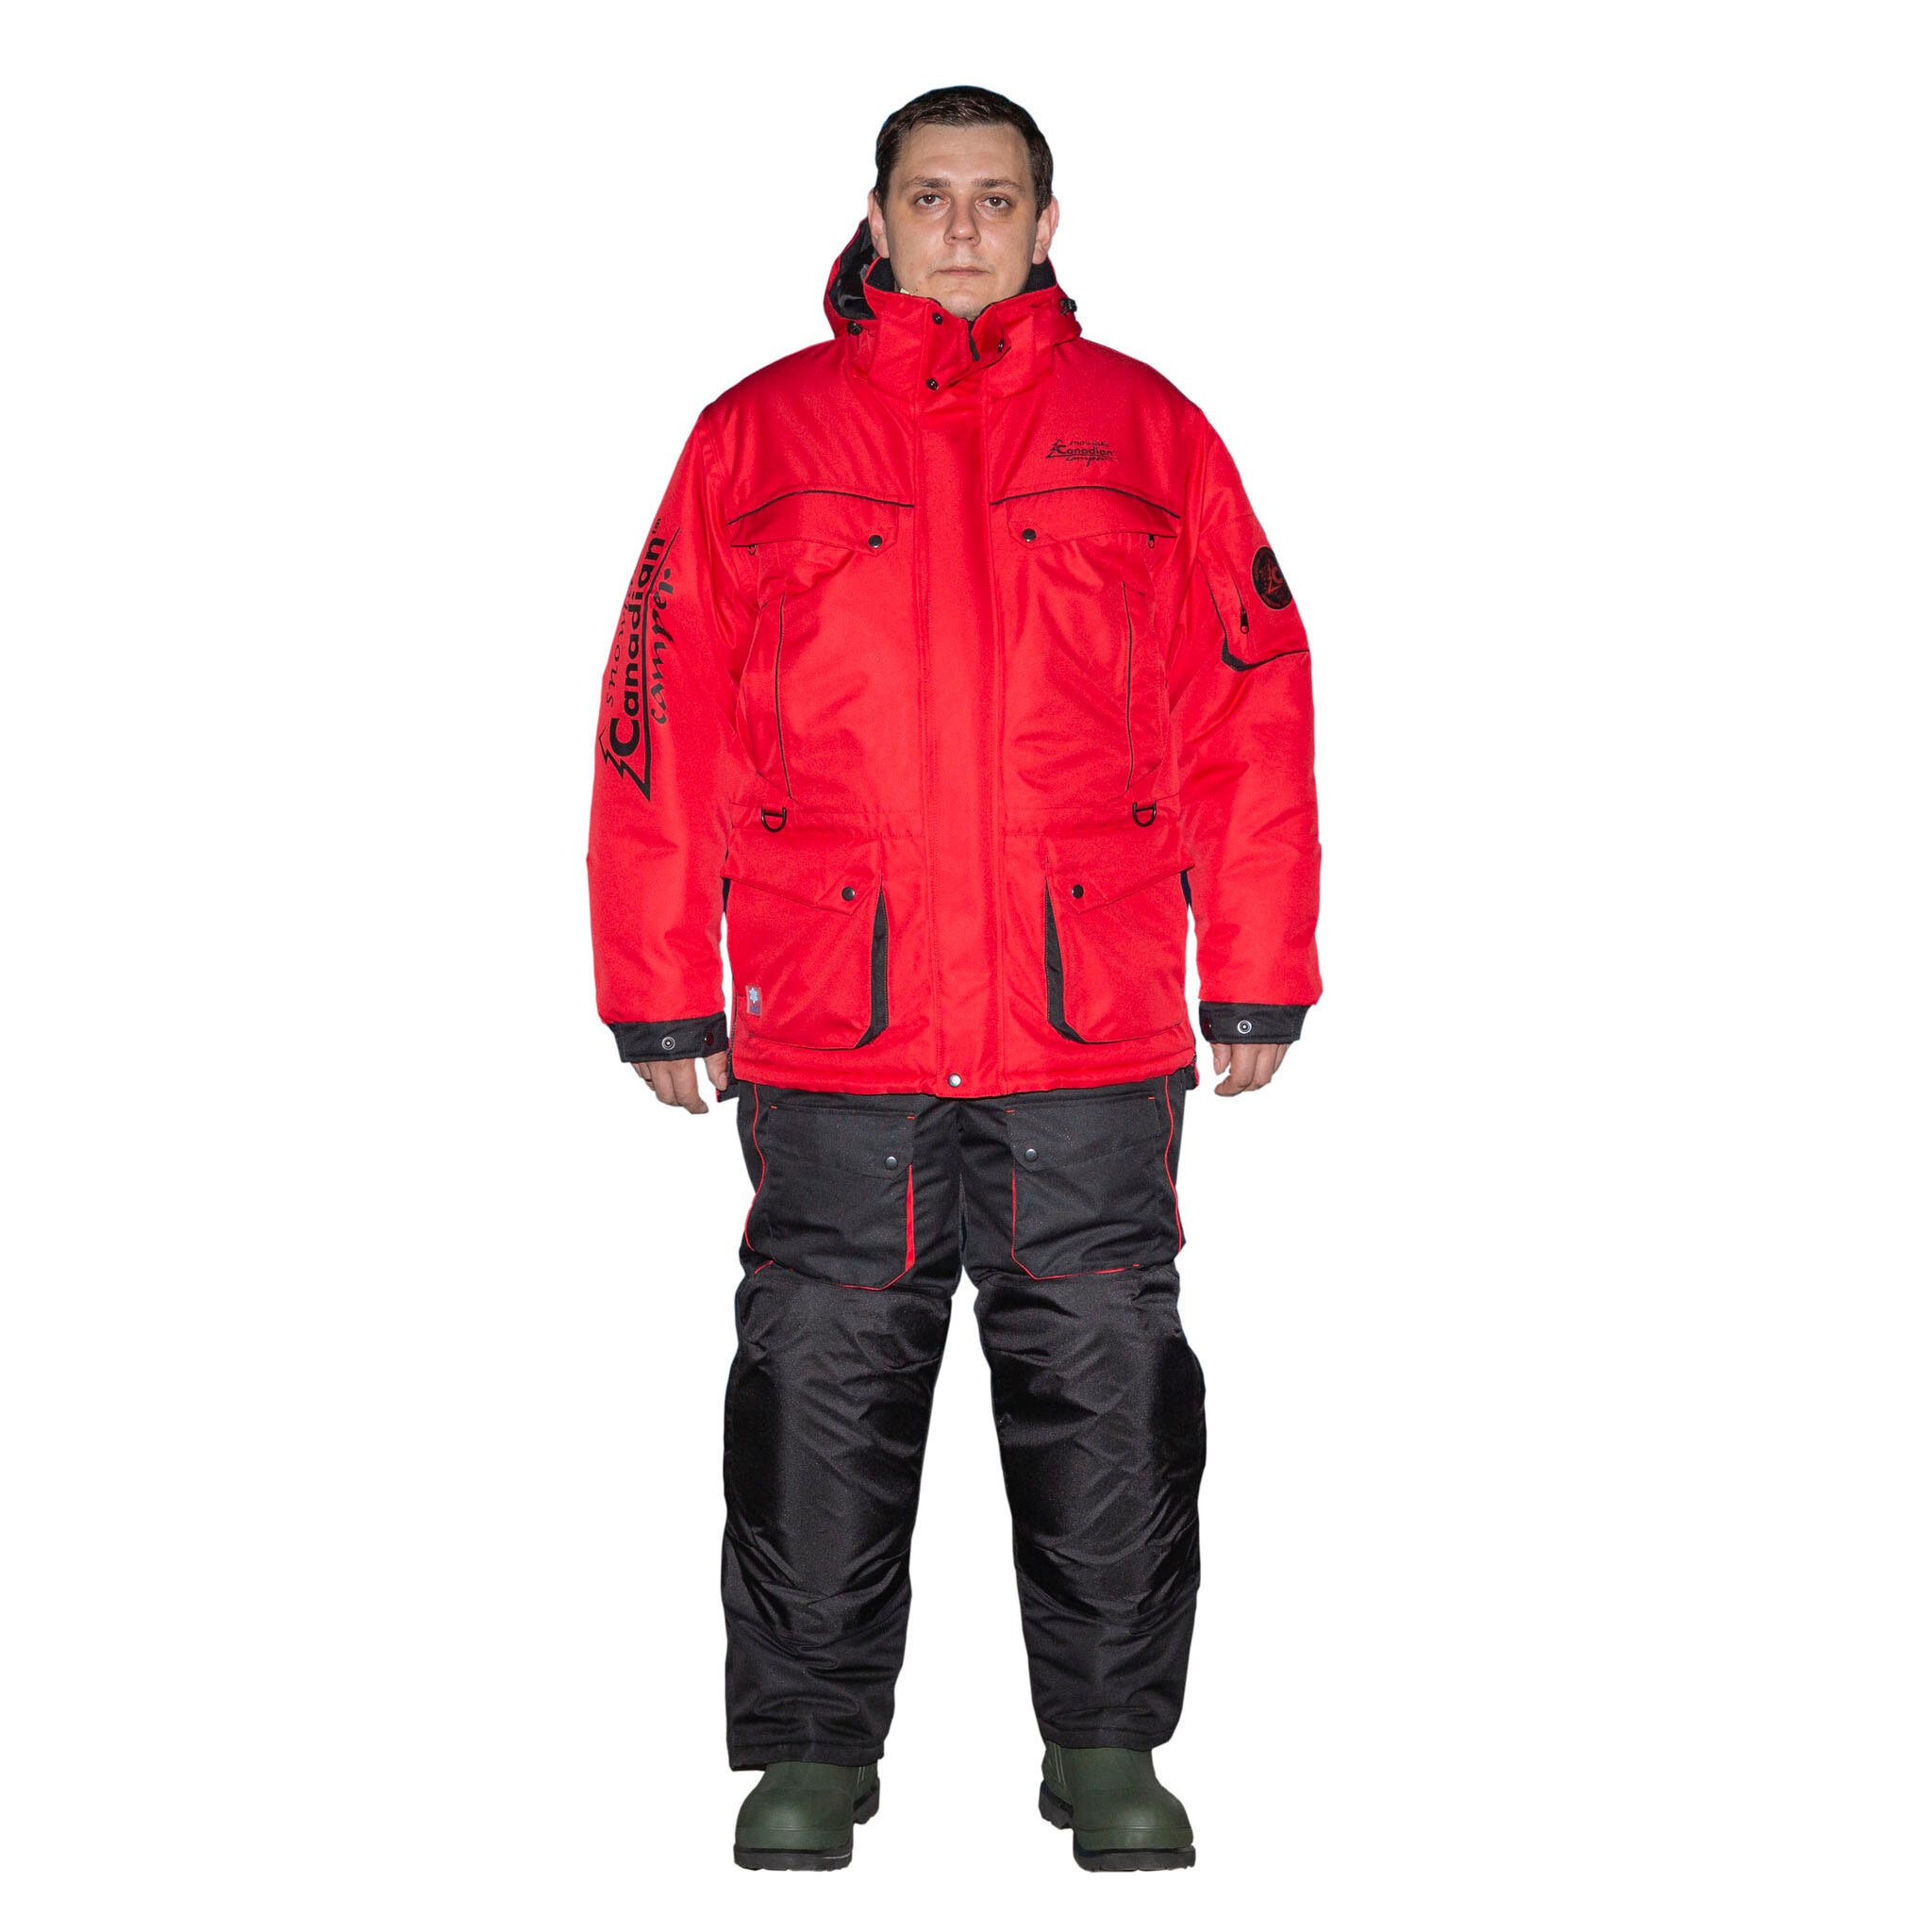 Костюм рыболовный зимний Canadian Camper SNOW LAKE PRO курткабрюки цвет blackred XXXL